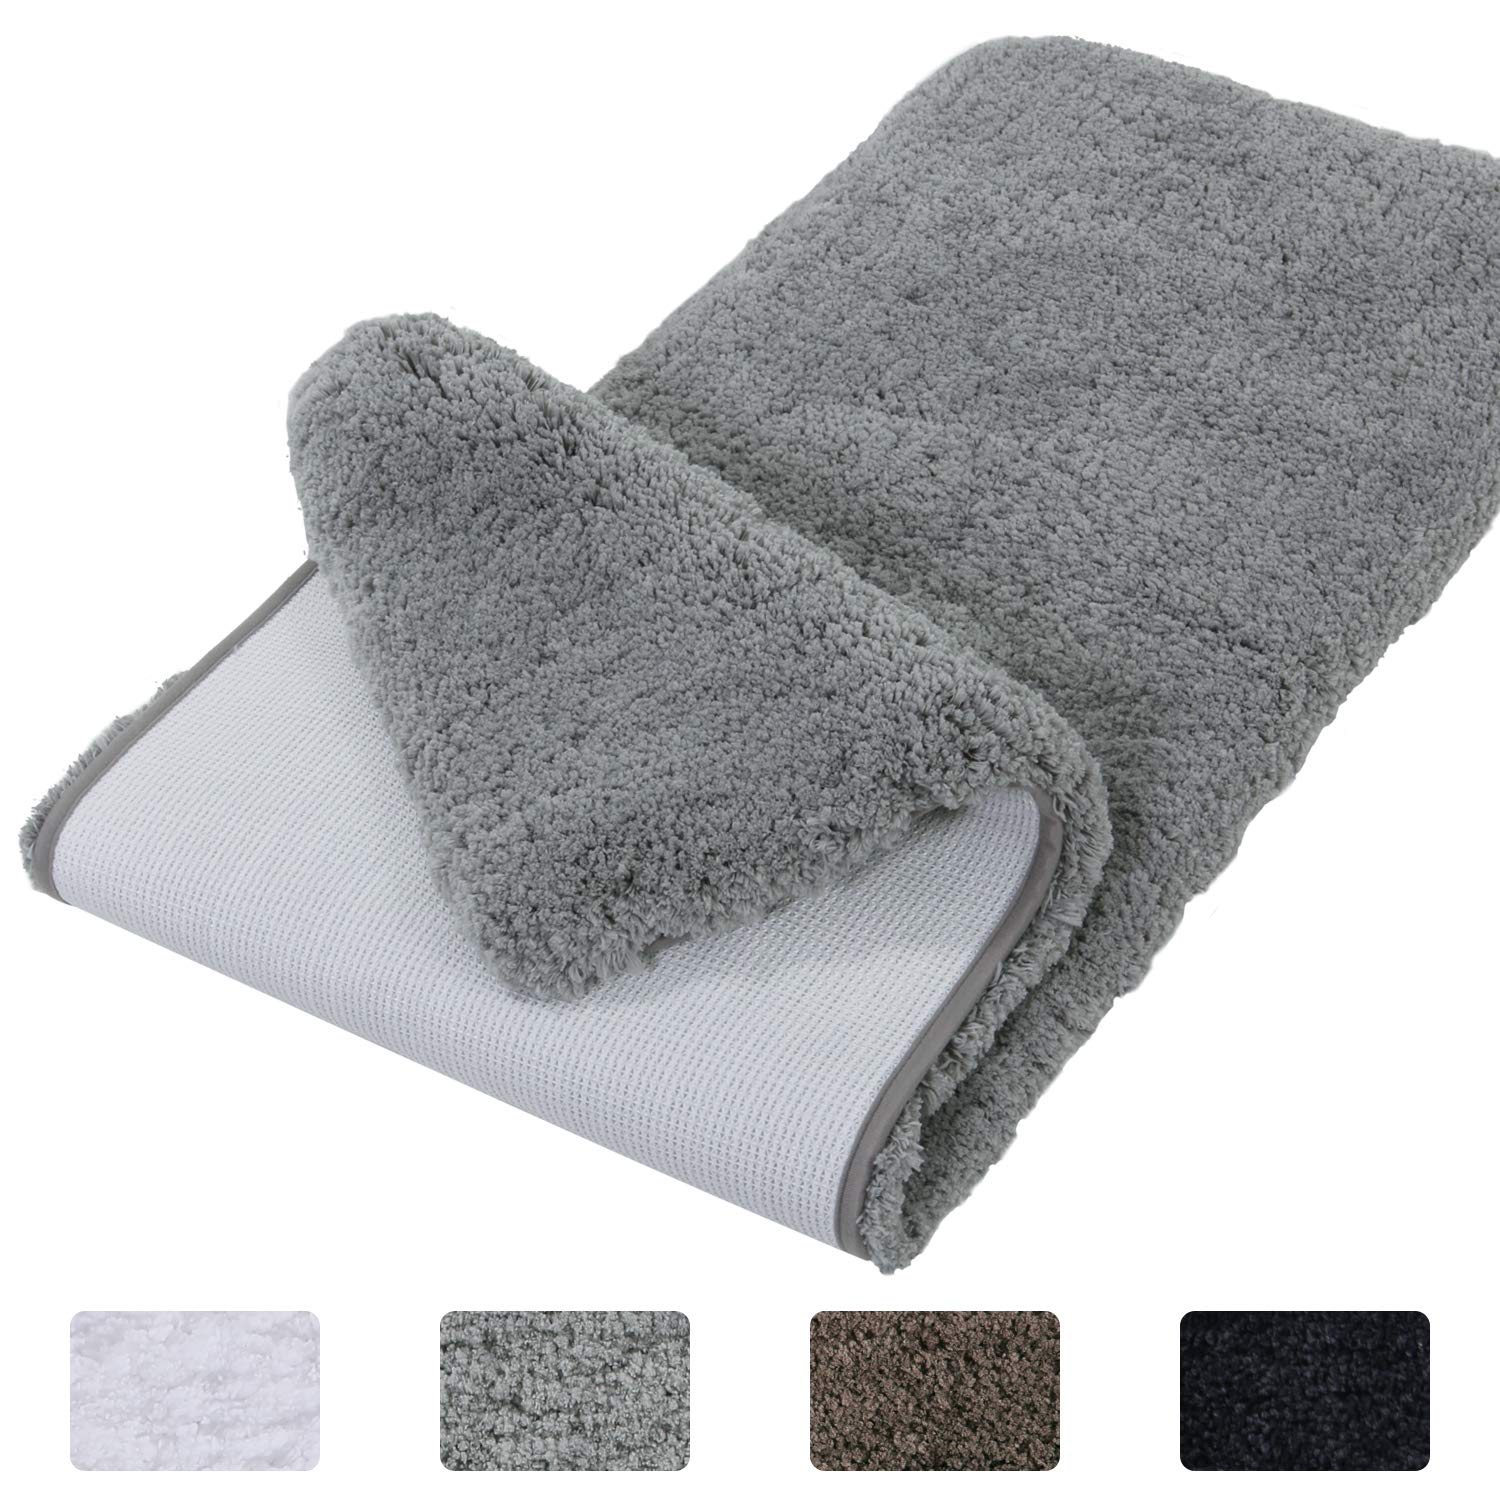 Large Gray Bathroom Rugs, 24×60 Absorbent Shaggy Shower Mat, Microfiber  Bath Mats for Bathroom, Luxury Bathroom Floor Mats Rubber Back